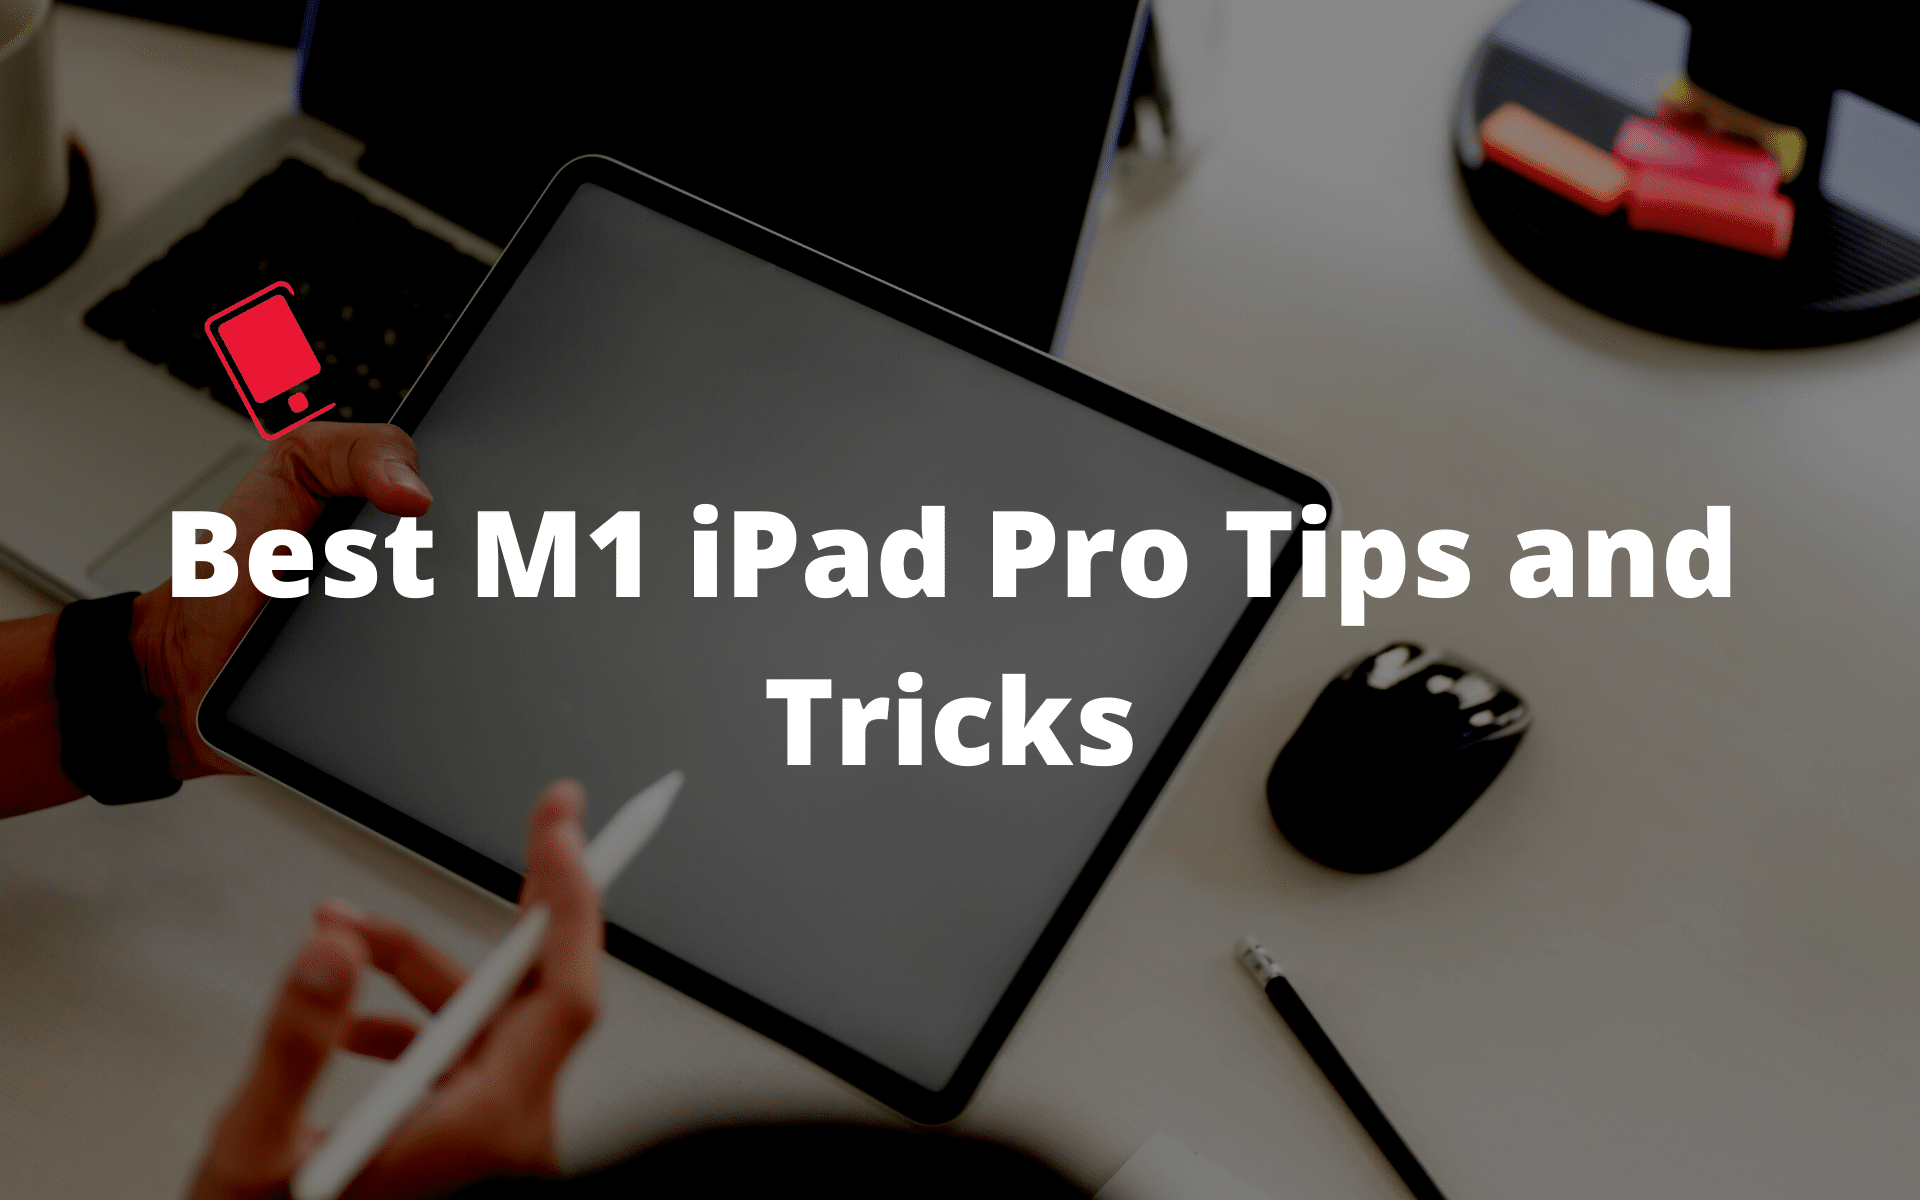 iPad Pro tips and tricks